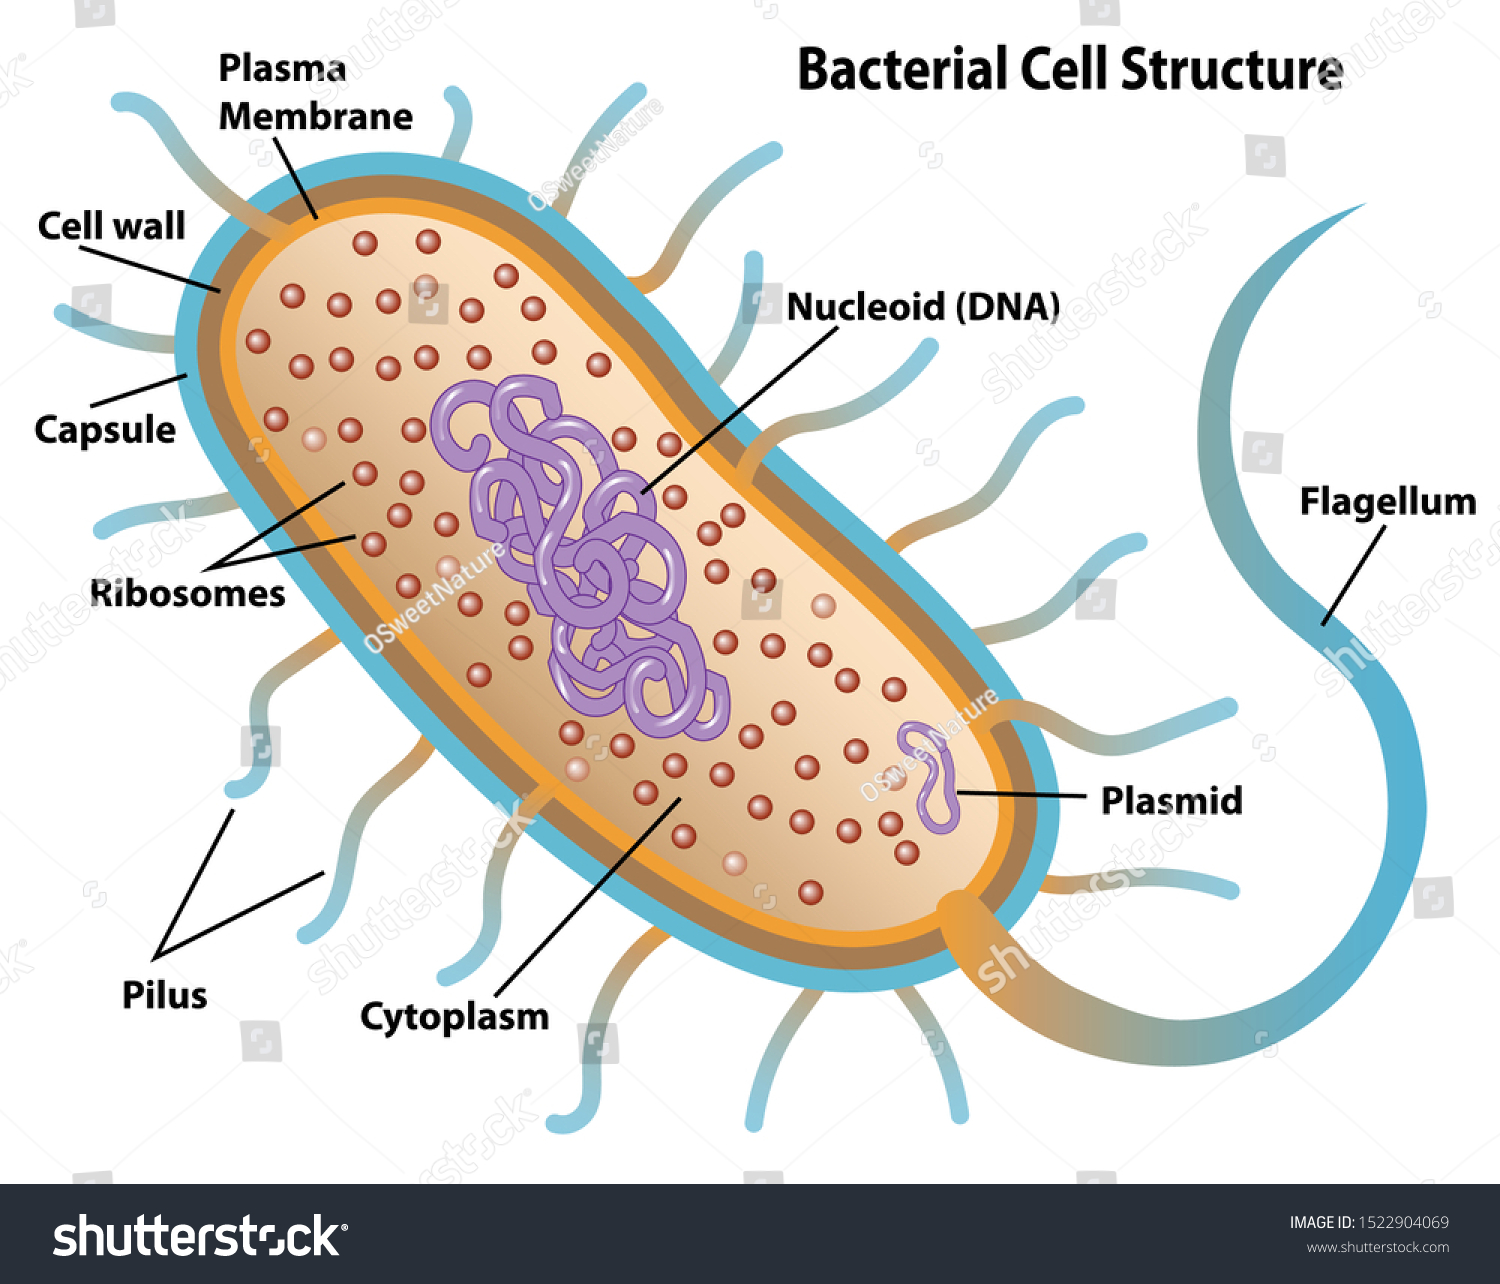 <p><u>Internal</u></p><p>Chromosome (1 or 2)</p><p>Plasmid</p><p>Cytoplasm</p><p>Nucleoid region</p><p>Ribosomes</p><p>Storage granules (inclusion bodies)</p><p>NO MITOCHONDRIA</p><p><u>Cell Wall</u></p><p>Cell membrane (outer &amp; inner)</p><p>Periplasmic space (Gram negatives)</p><p>Peptidoglycan</p><p><u>Appendages</u></p><p>Flagella</p><p>Fimbriae</p><p>Pili</p><p>Capsule (Glycocalyx)</p>